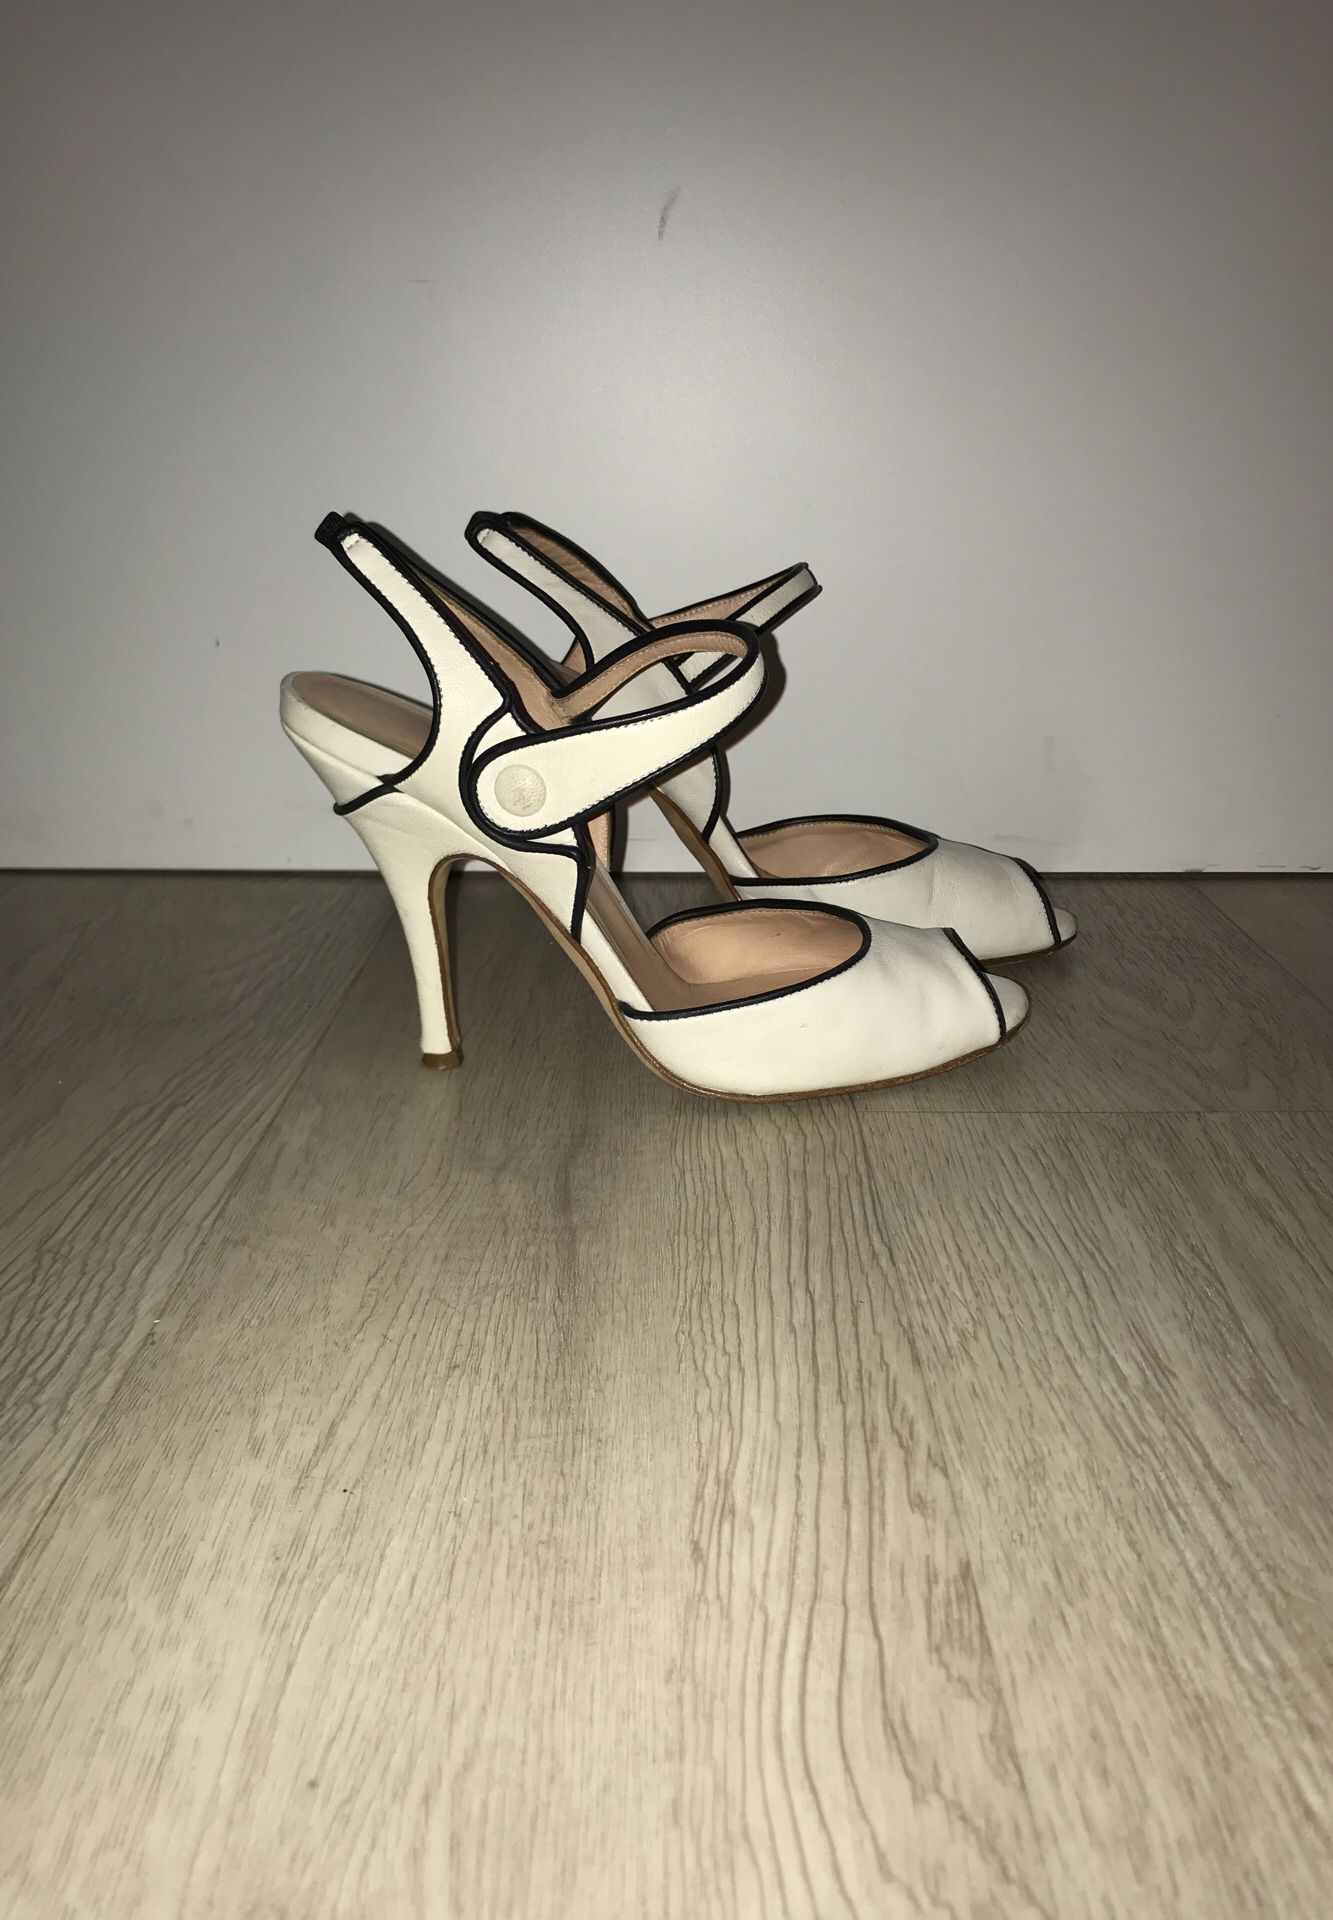 Dolce & Gabbana heels shoes white black vintage style 37 size